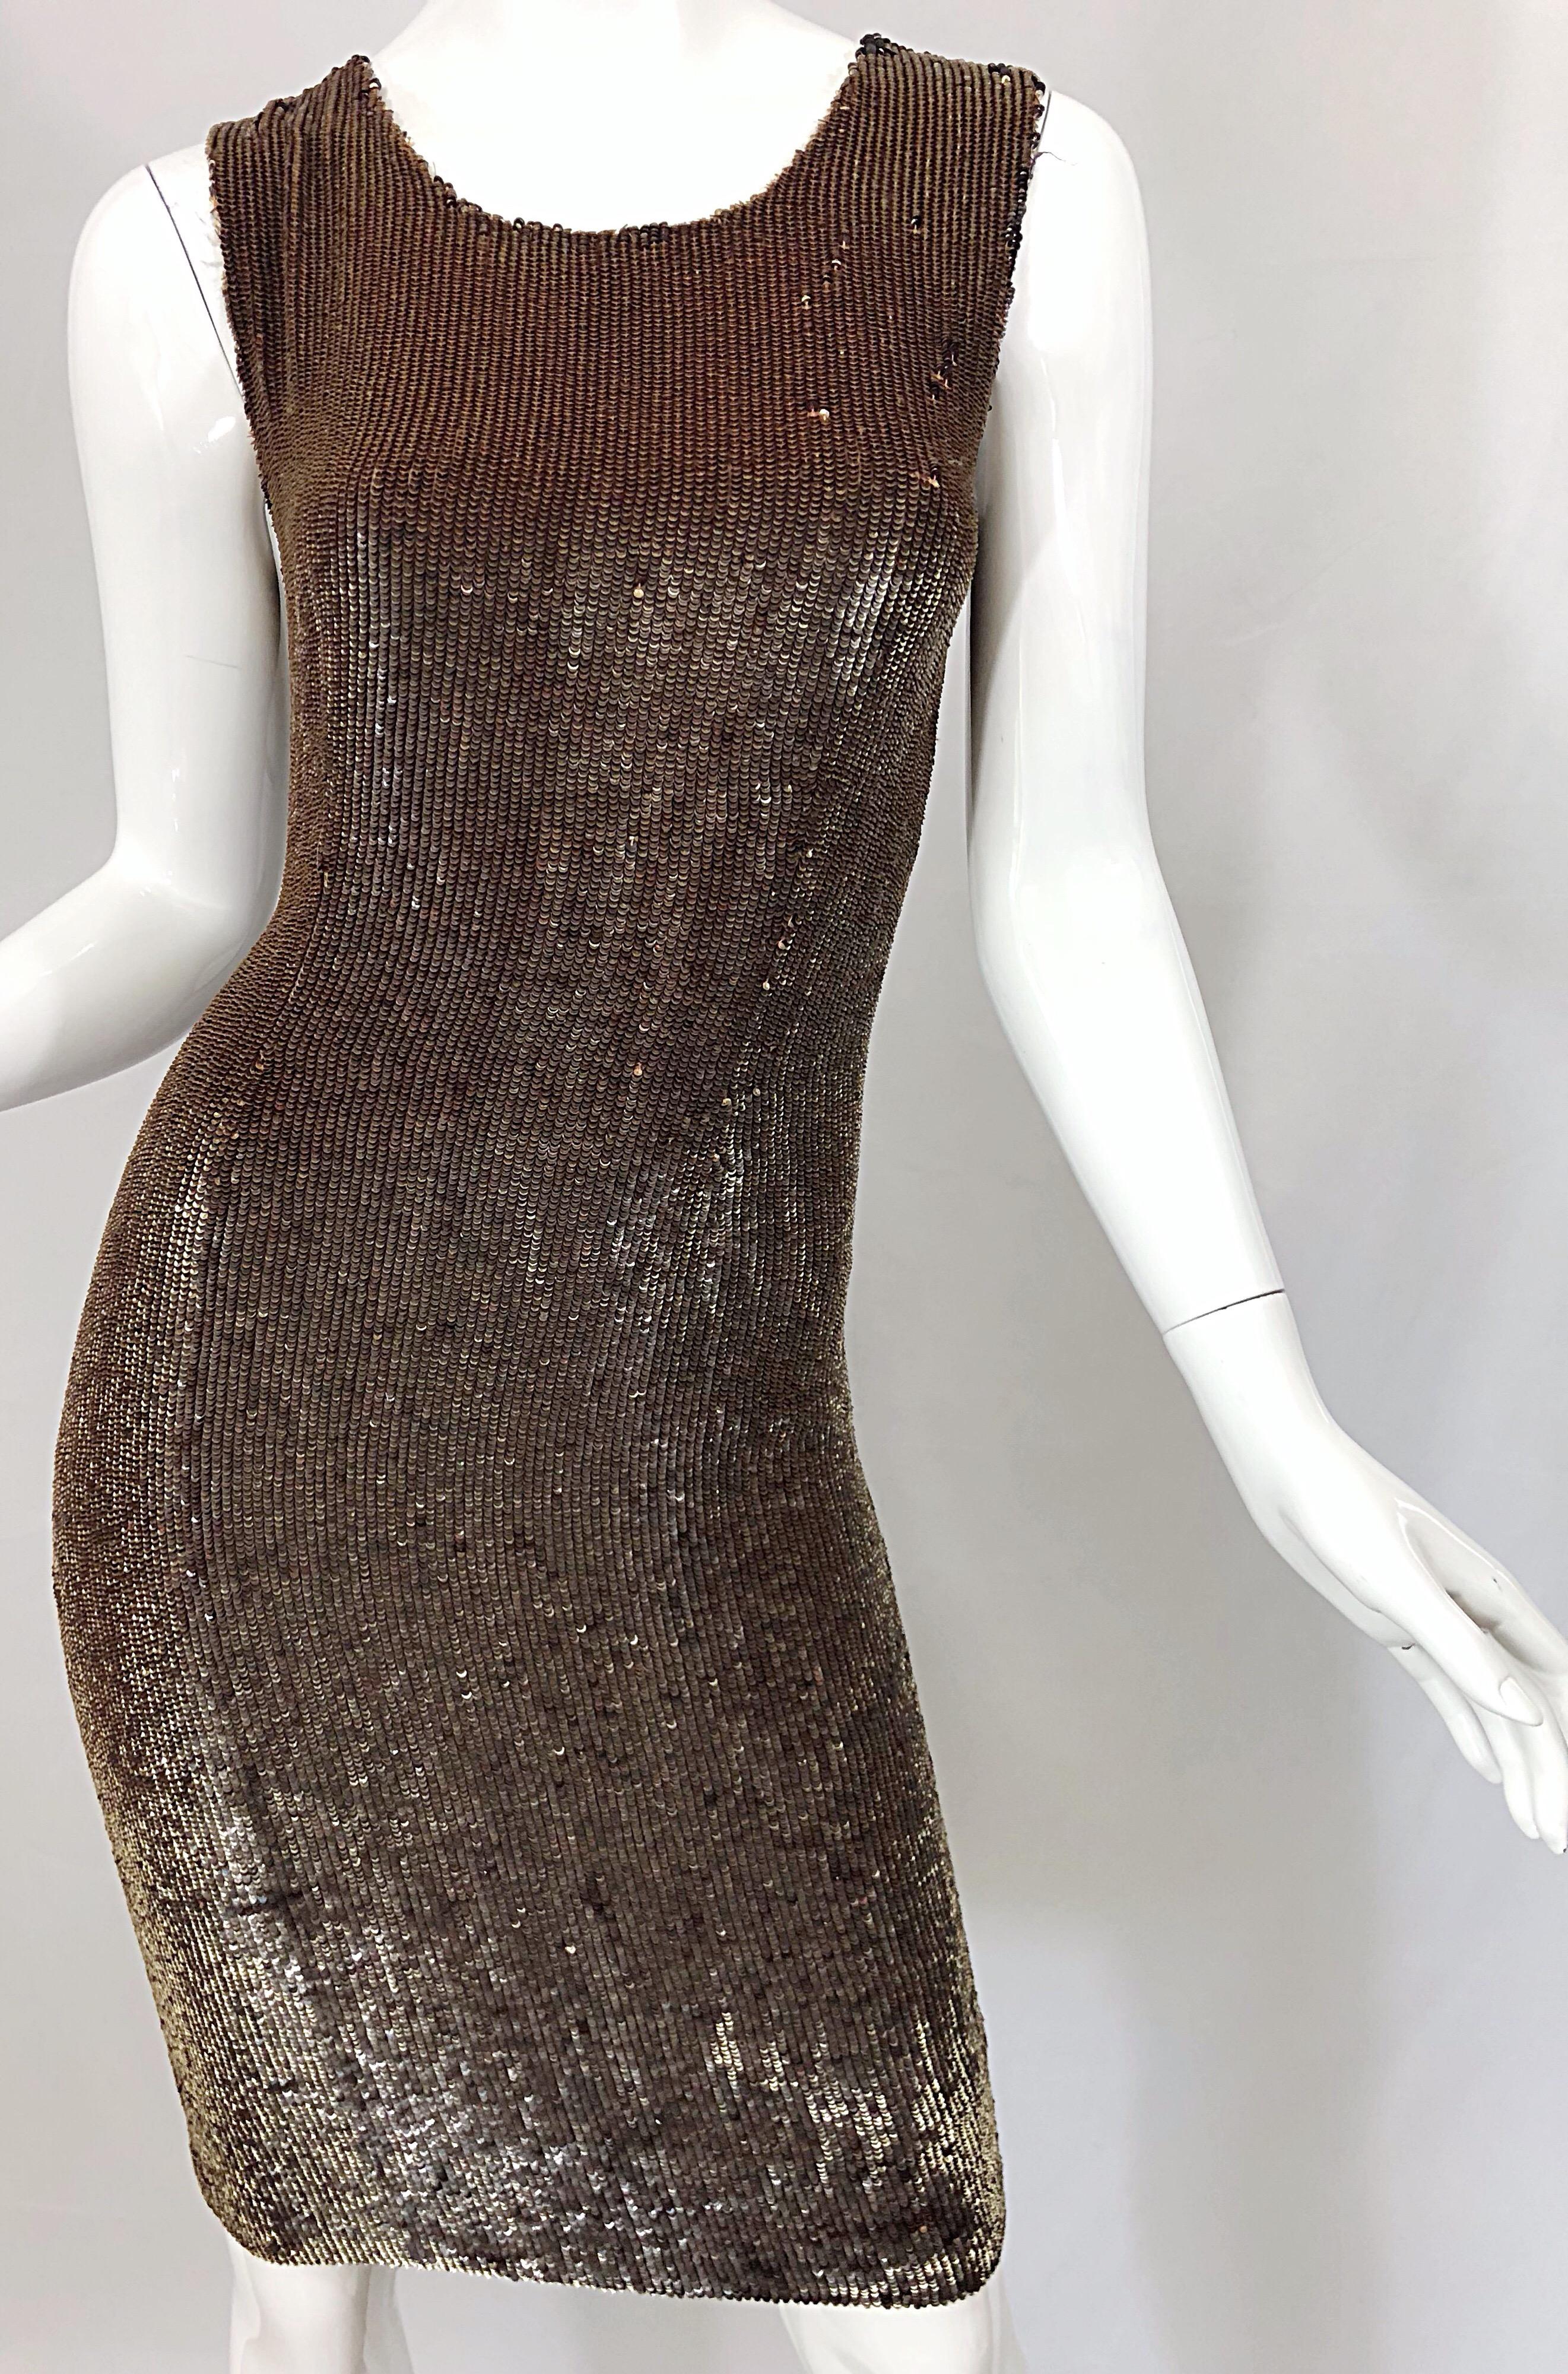 Bill Blass Early 2000s Silk Chiffon Brown Bronze Fully Sequined Sheath Dress For Sale 8